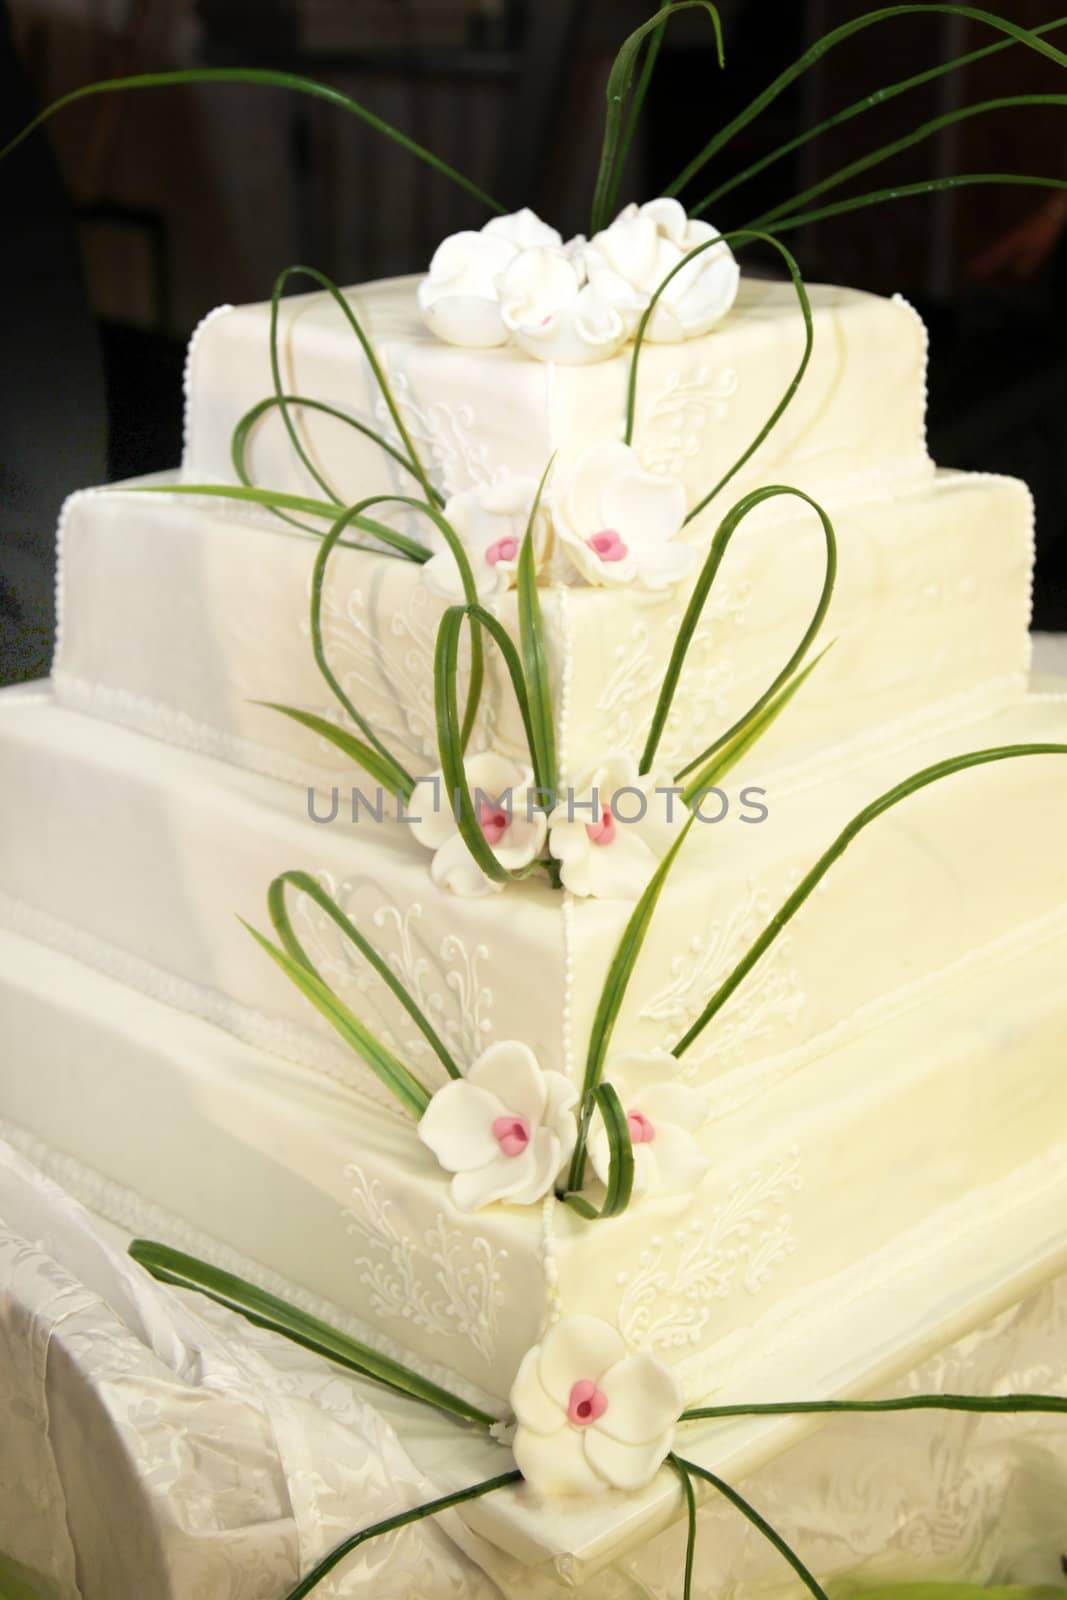 four-tiered wedding cake or birthday cake  by Farina6000